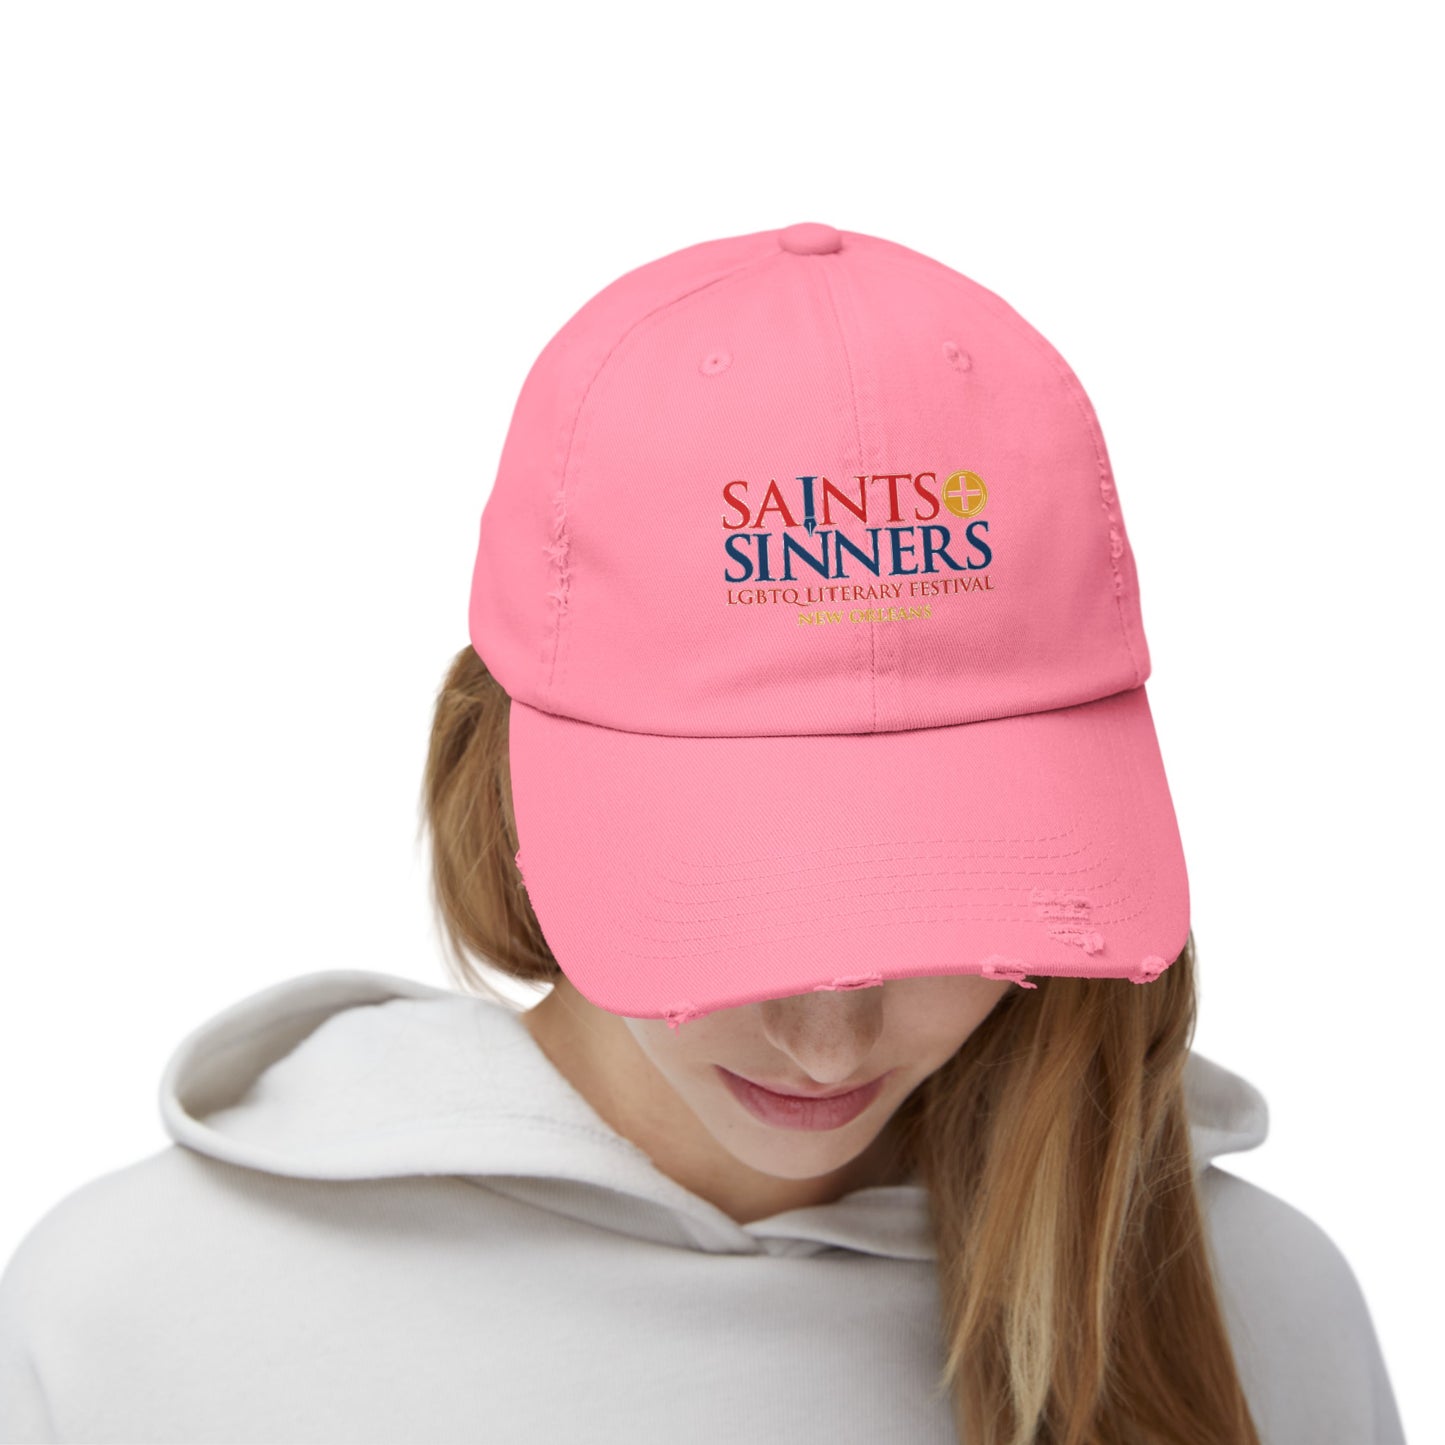 Saints & Sinners Logo Distressed Cap